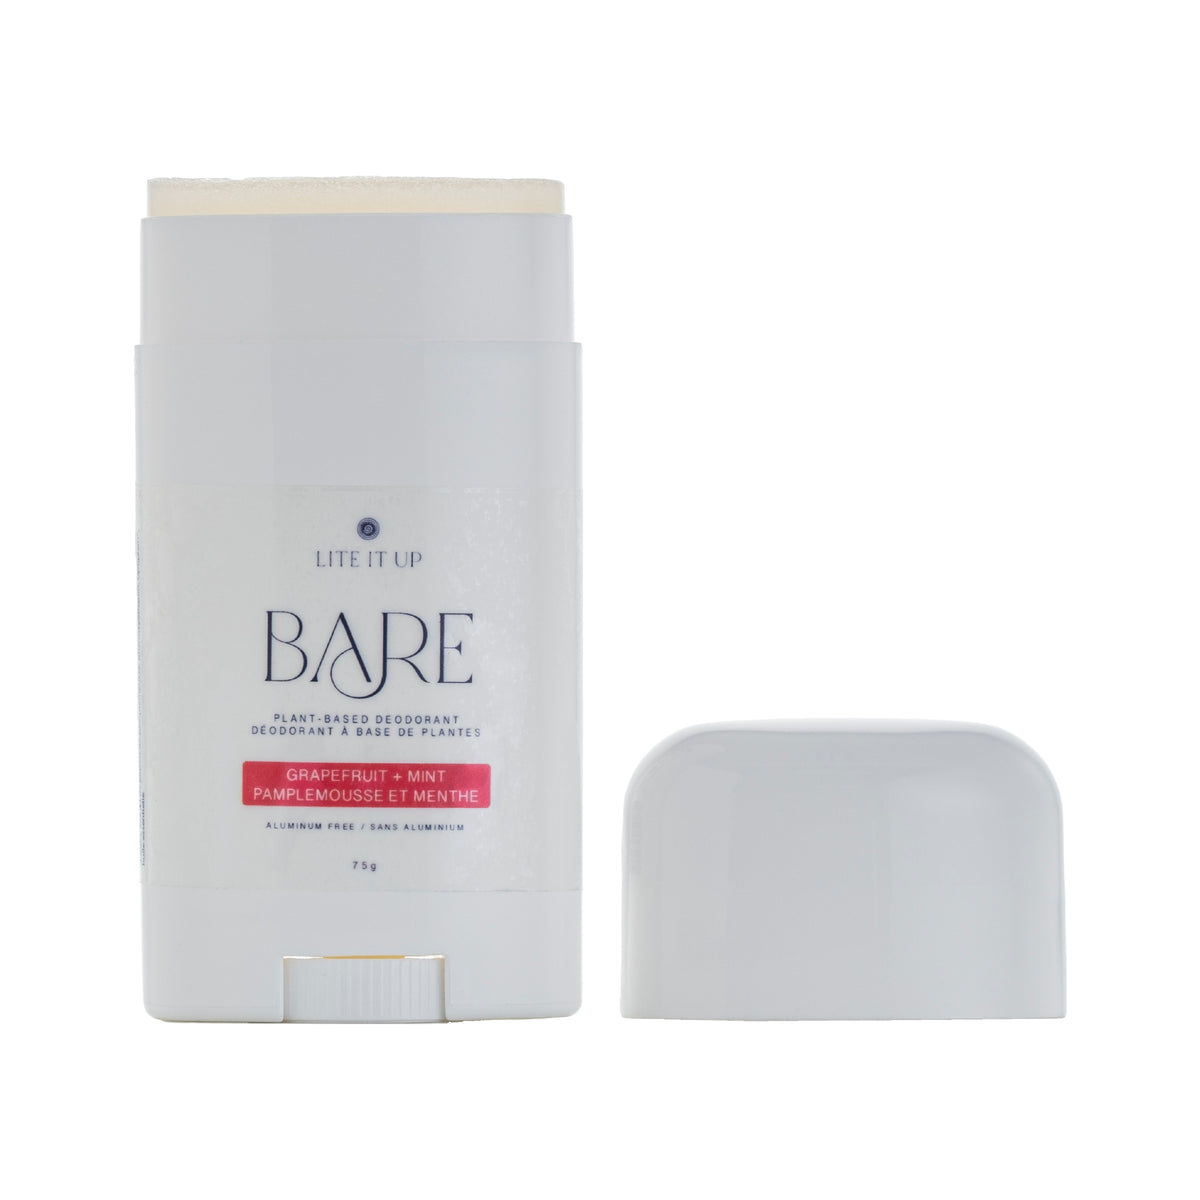 BARE Plant Based Deodorant - GRAPEFRUIT + MINT